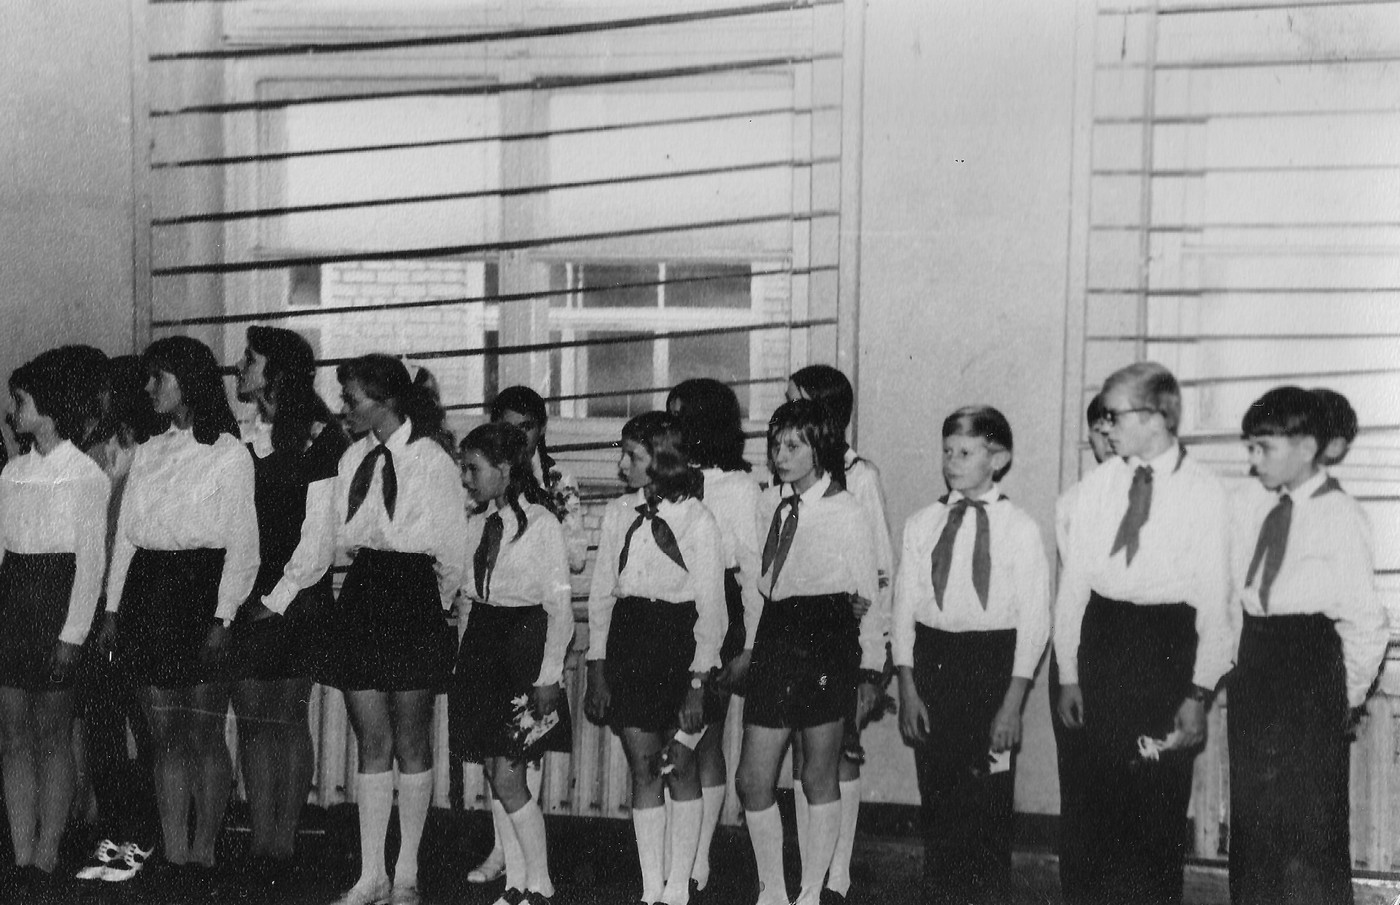 Skolēni ierindas skatē 1970-tie gadi